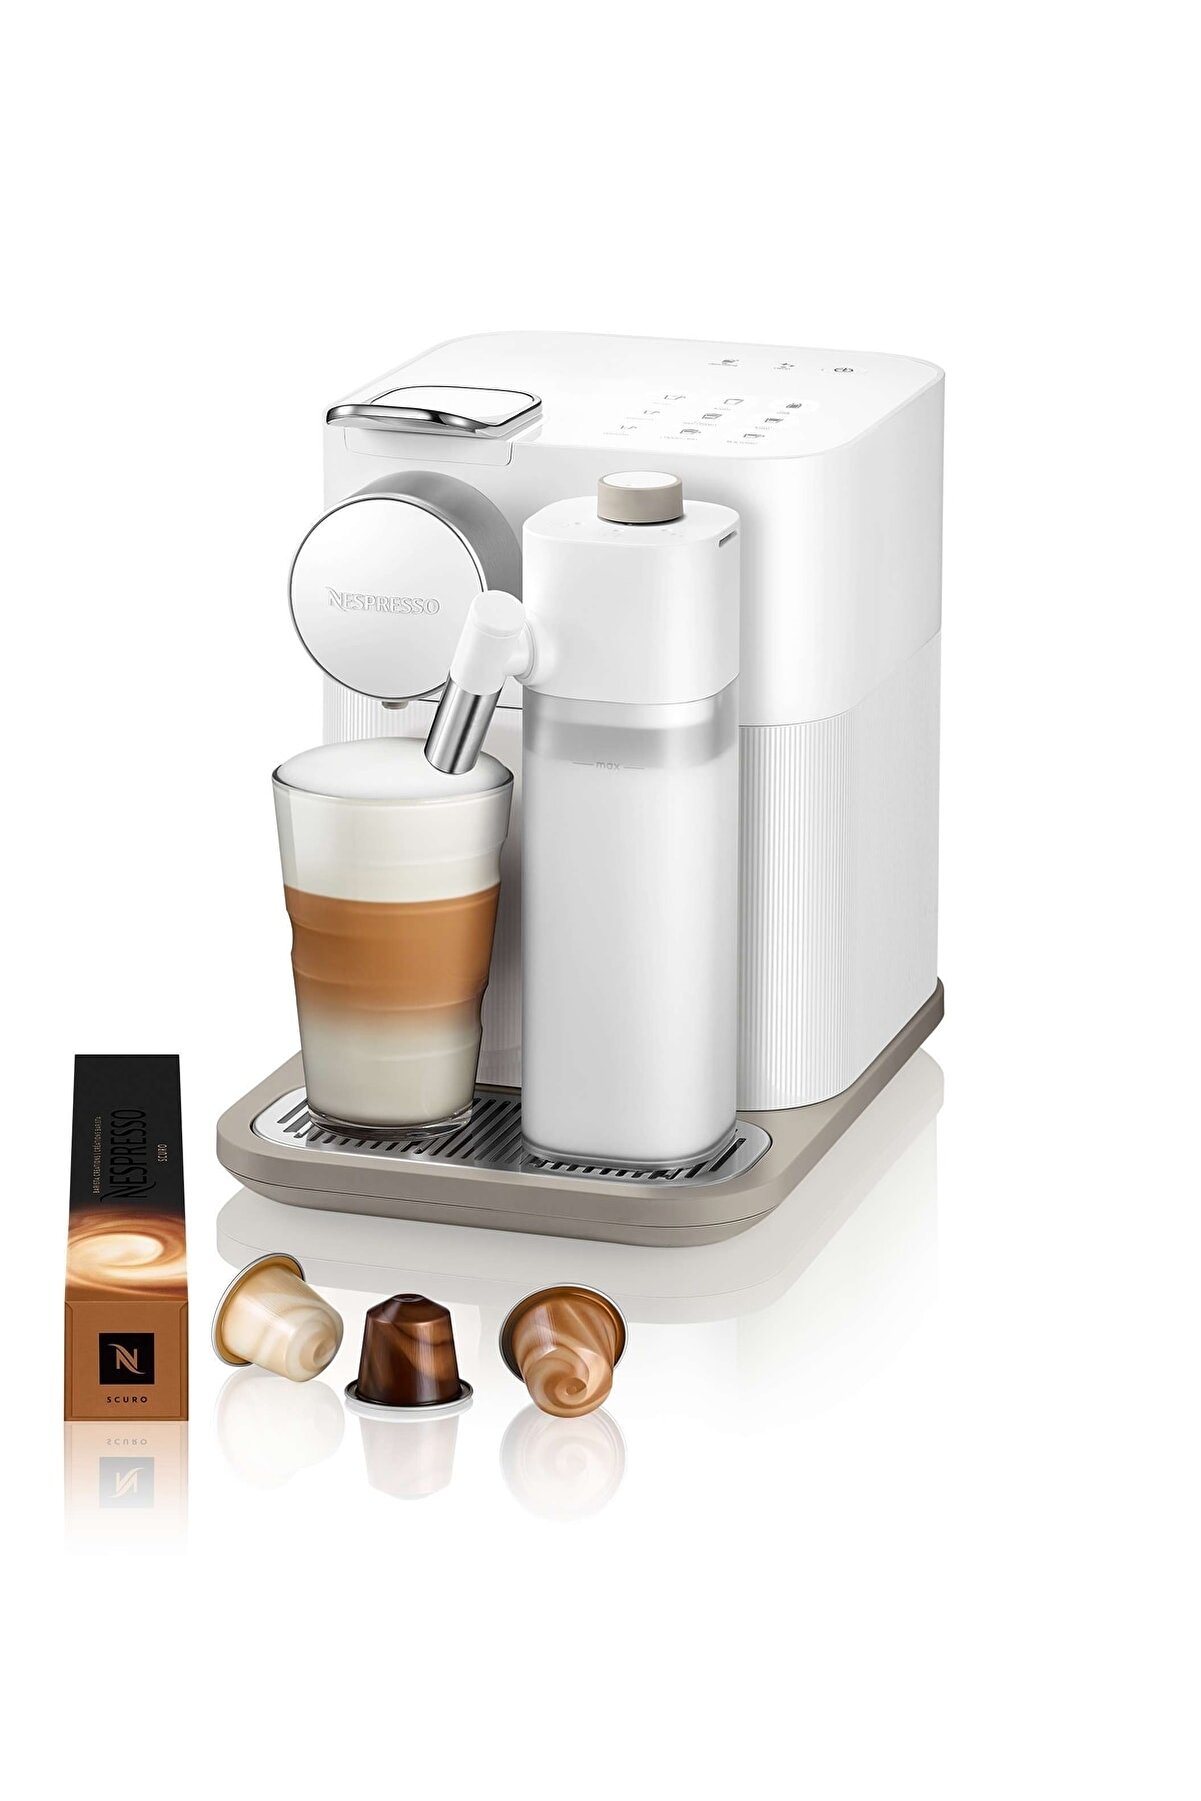 Nespresso Beyaz F531 White Gran Lattissima Kapsüllü Kahve Makinesi